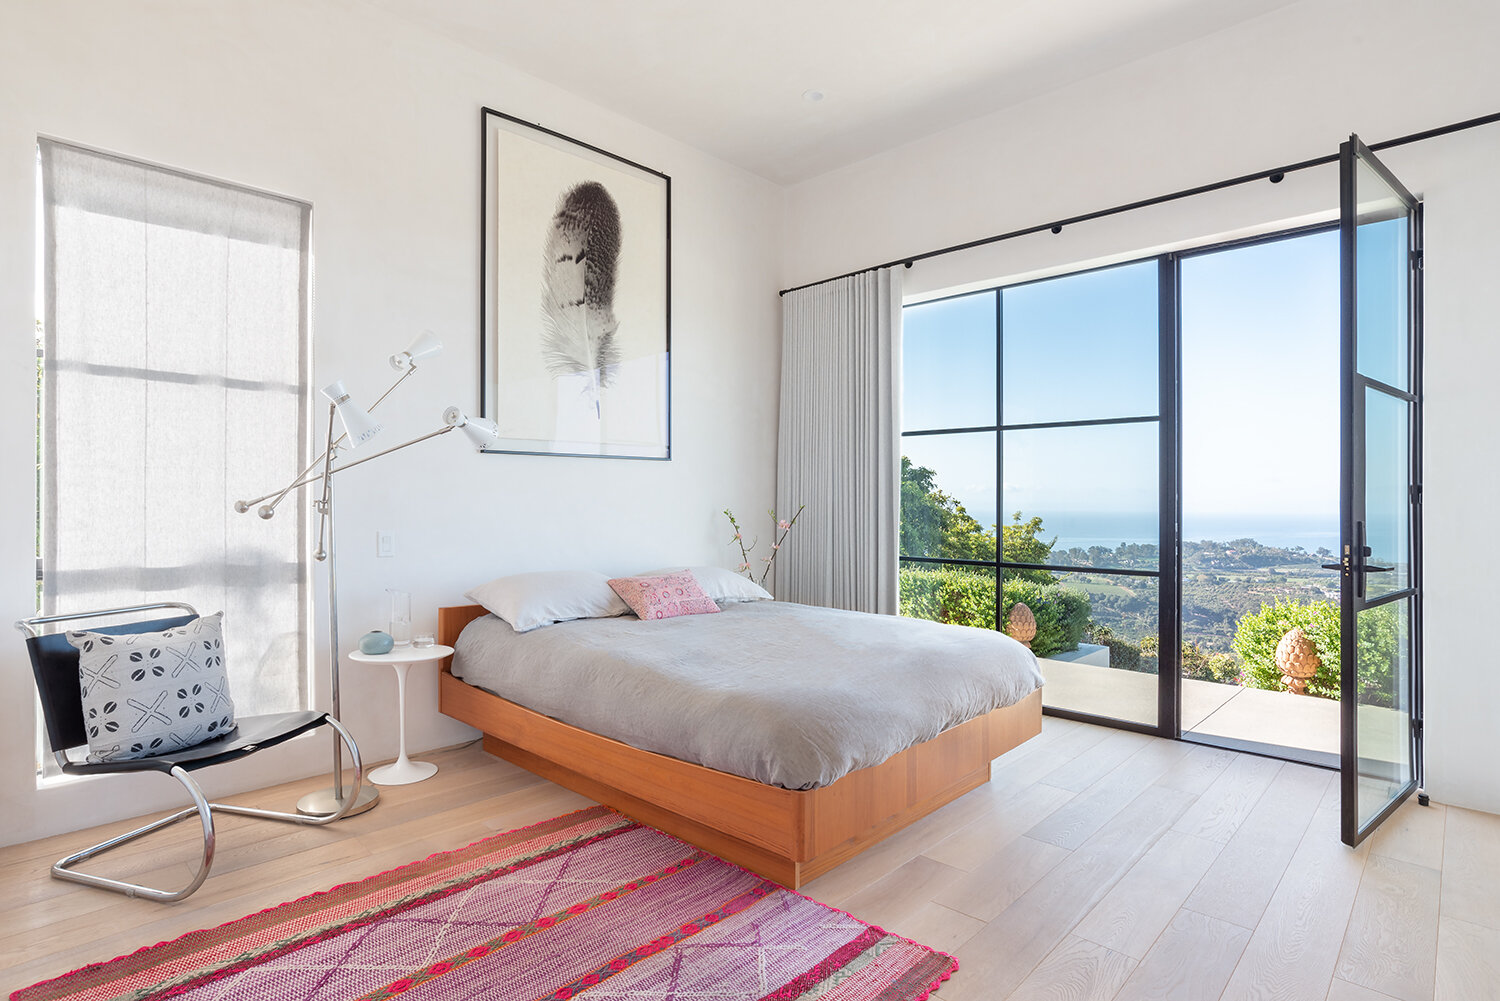  Carpinteria, California modern bedroom. Interior design by Mint Home Decor. Photography by Crystal Waye Photo Design. 